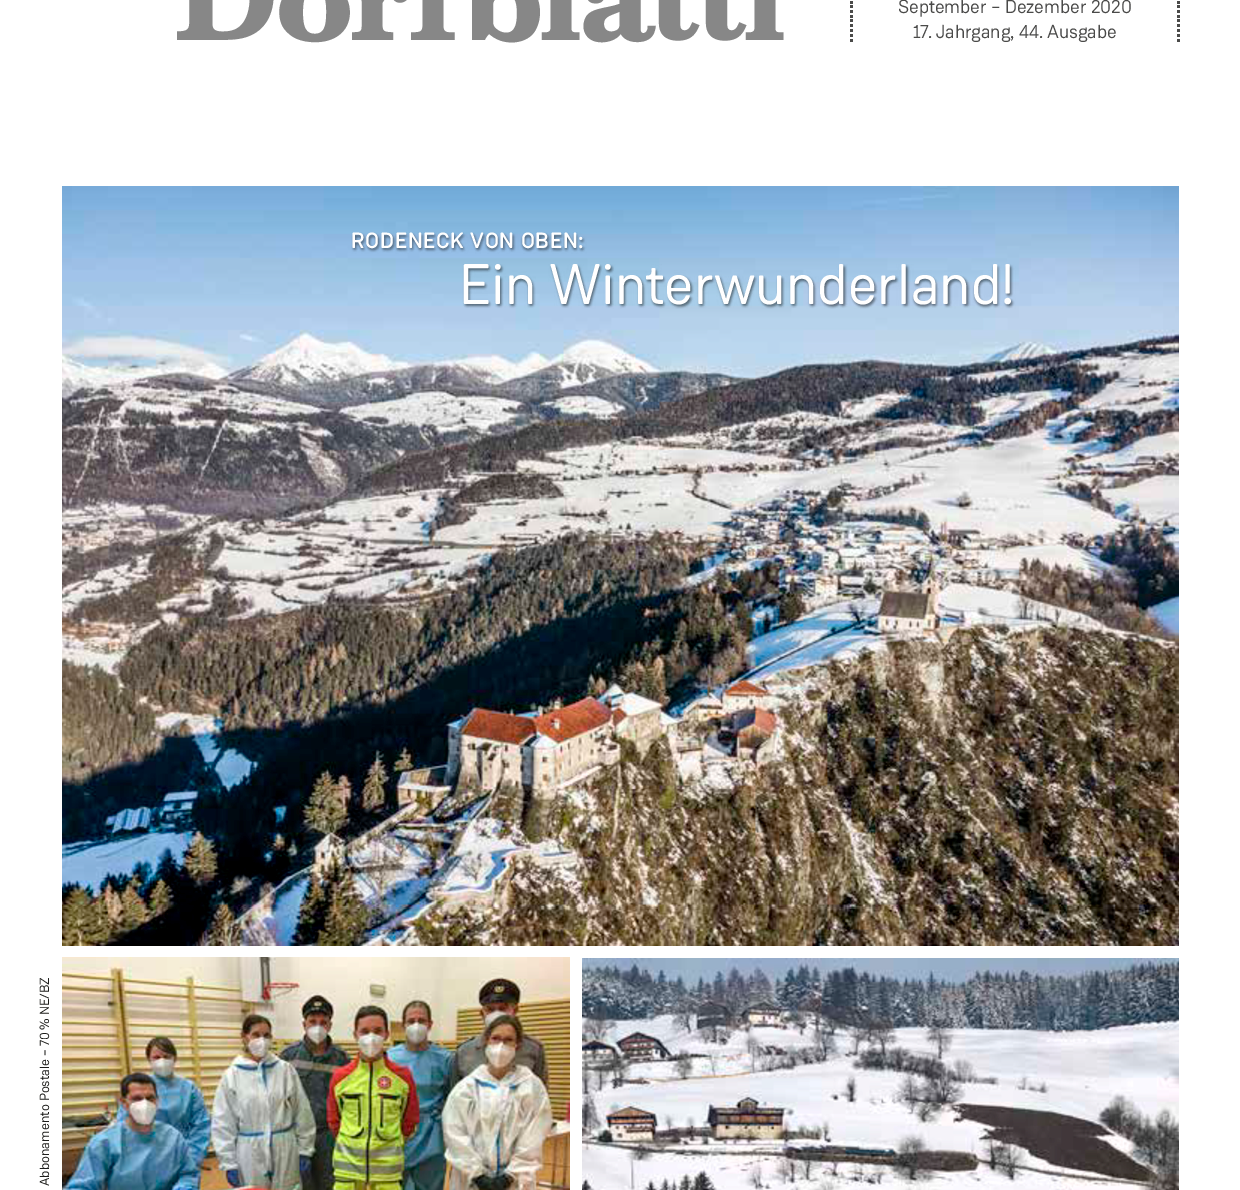 's Ronegga Dorfblattl - 44. Ausgabe